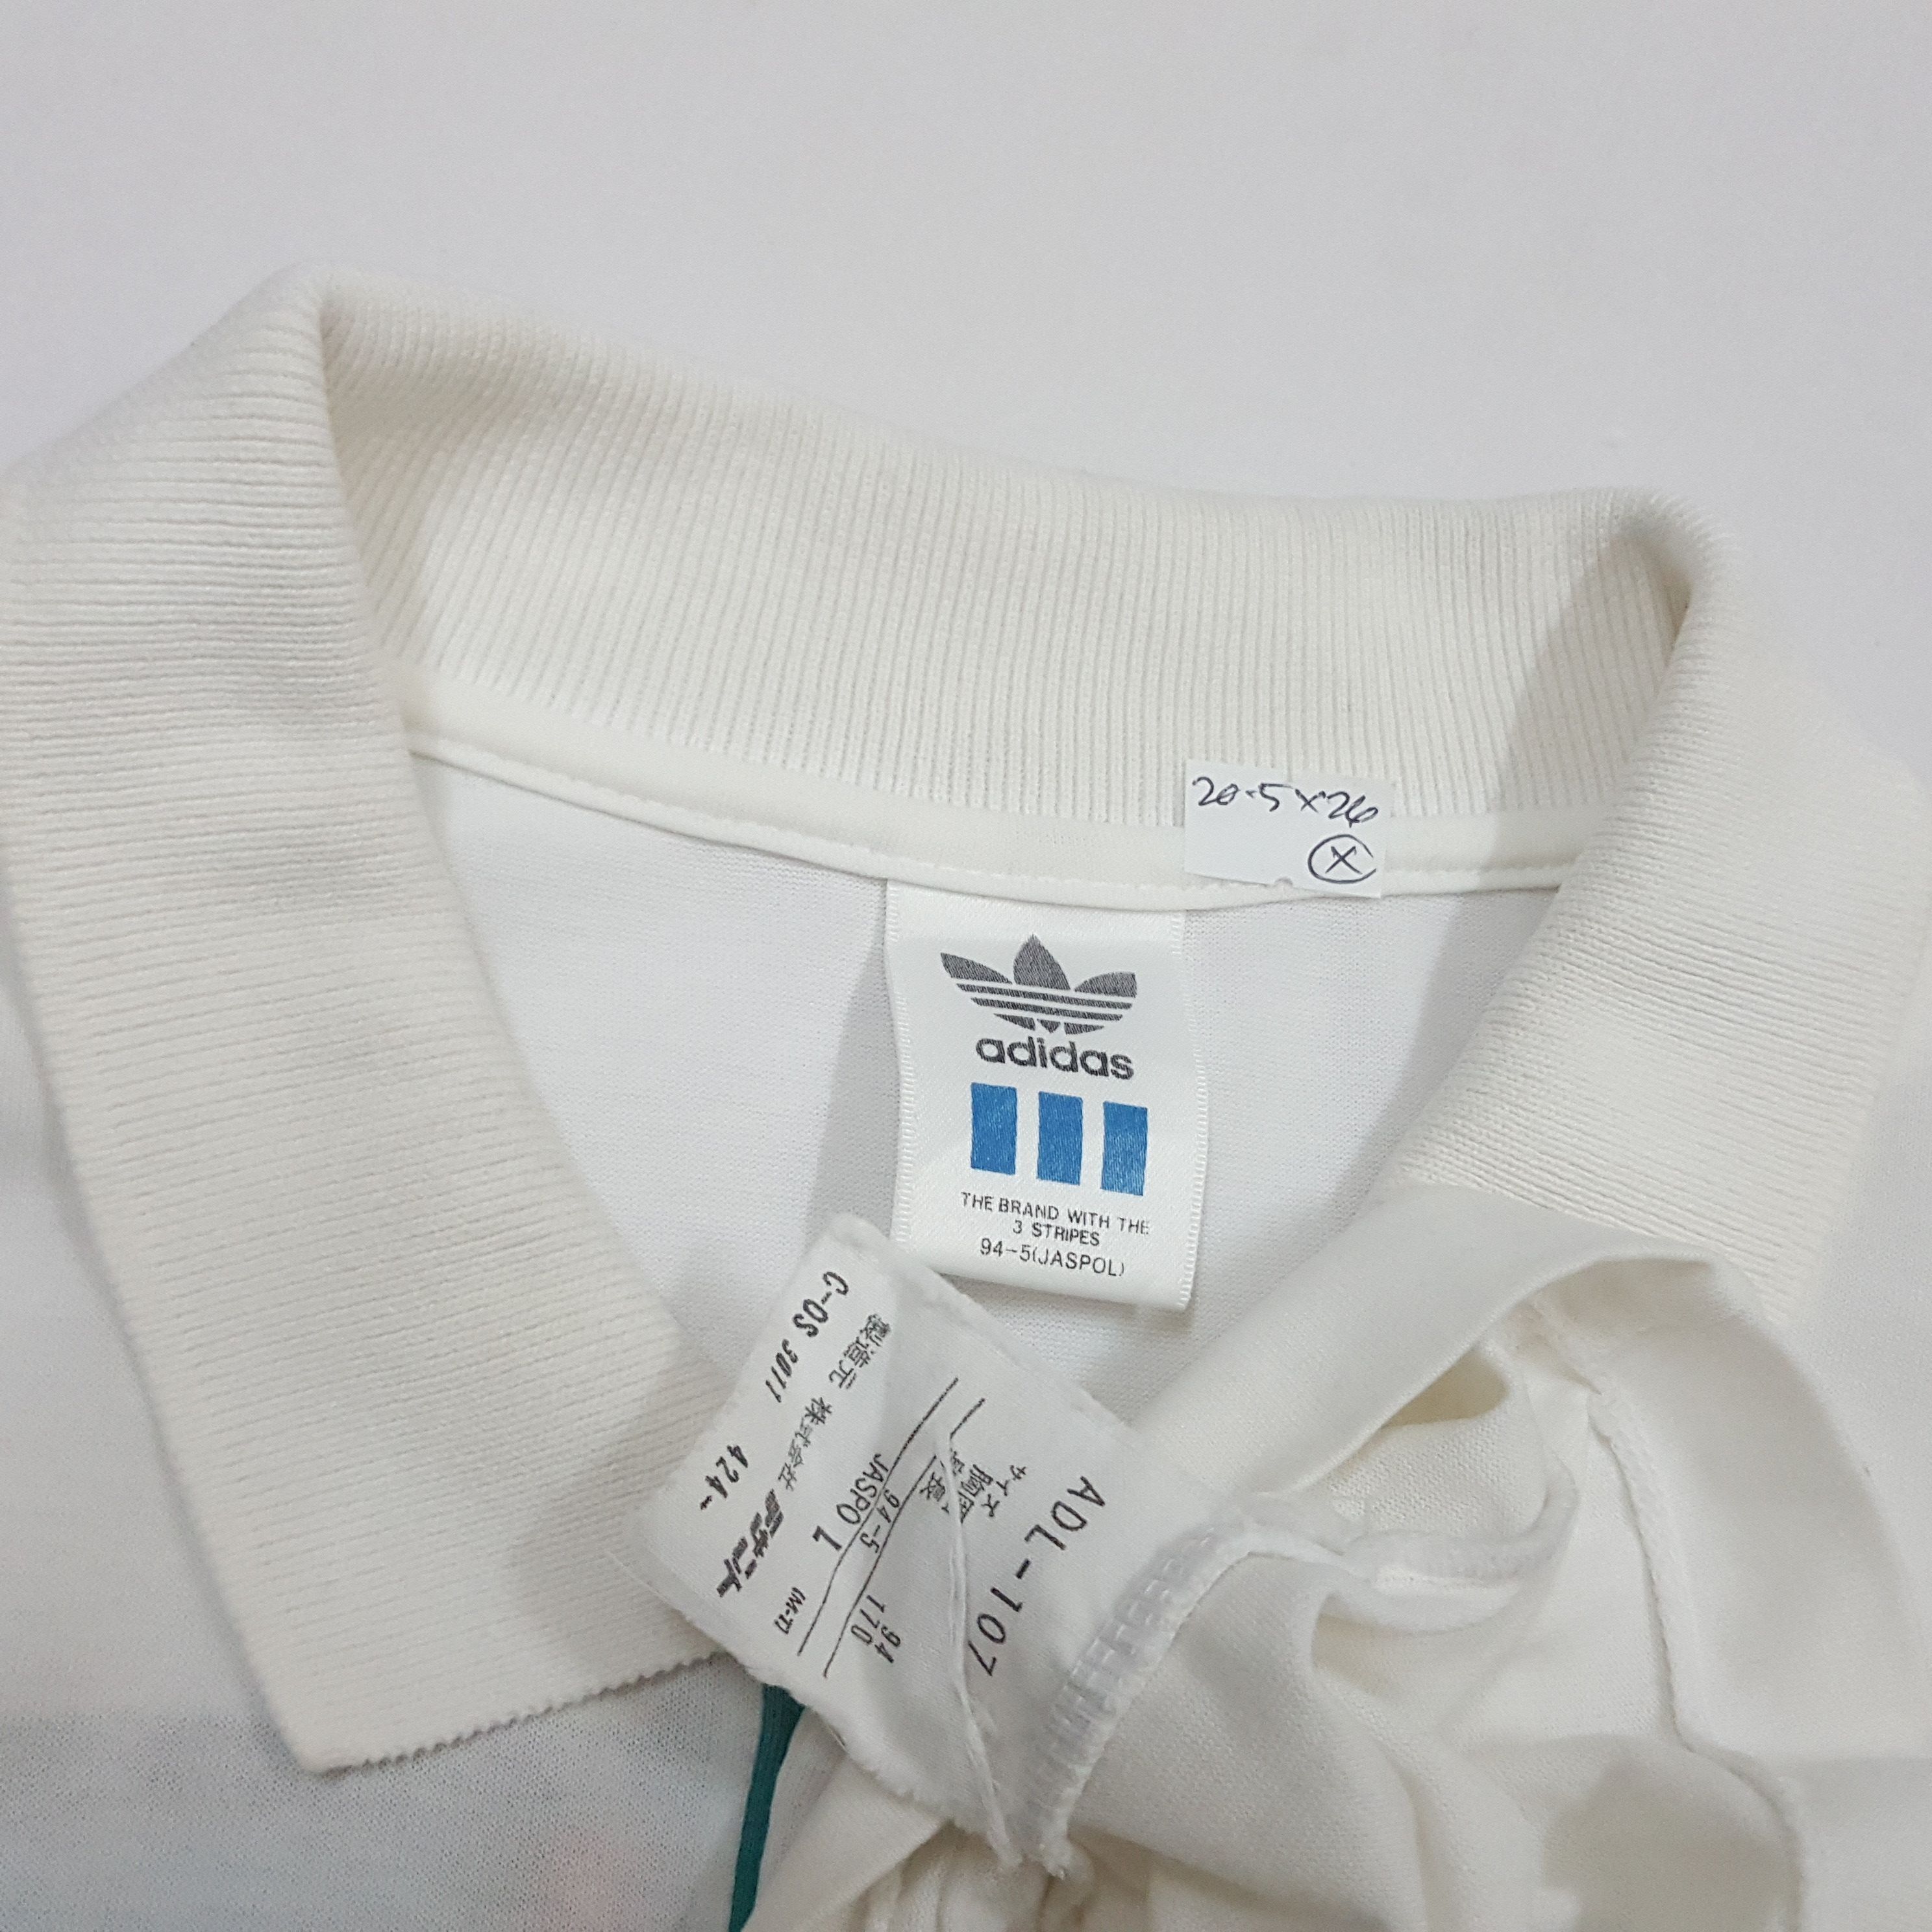 Adidas Vintage Adidas Ivan Lendl design jersey polo shirt Size US M / EU 48-50 / 2 - 5 Preview